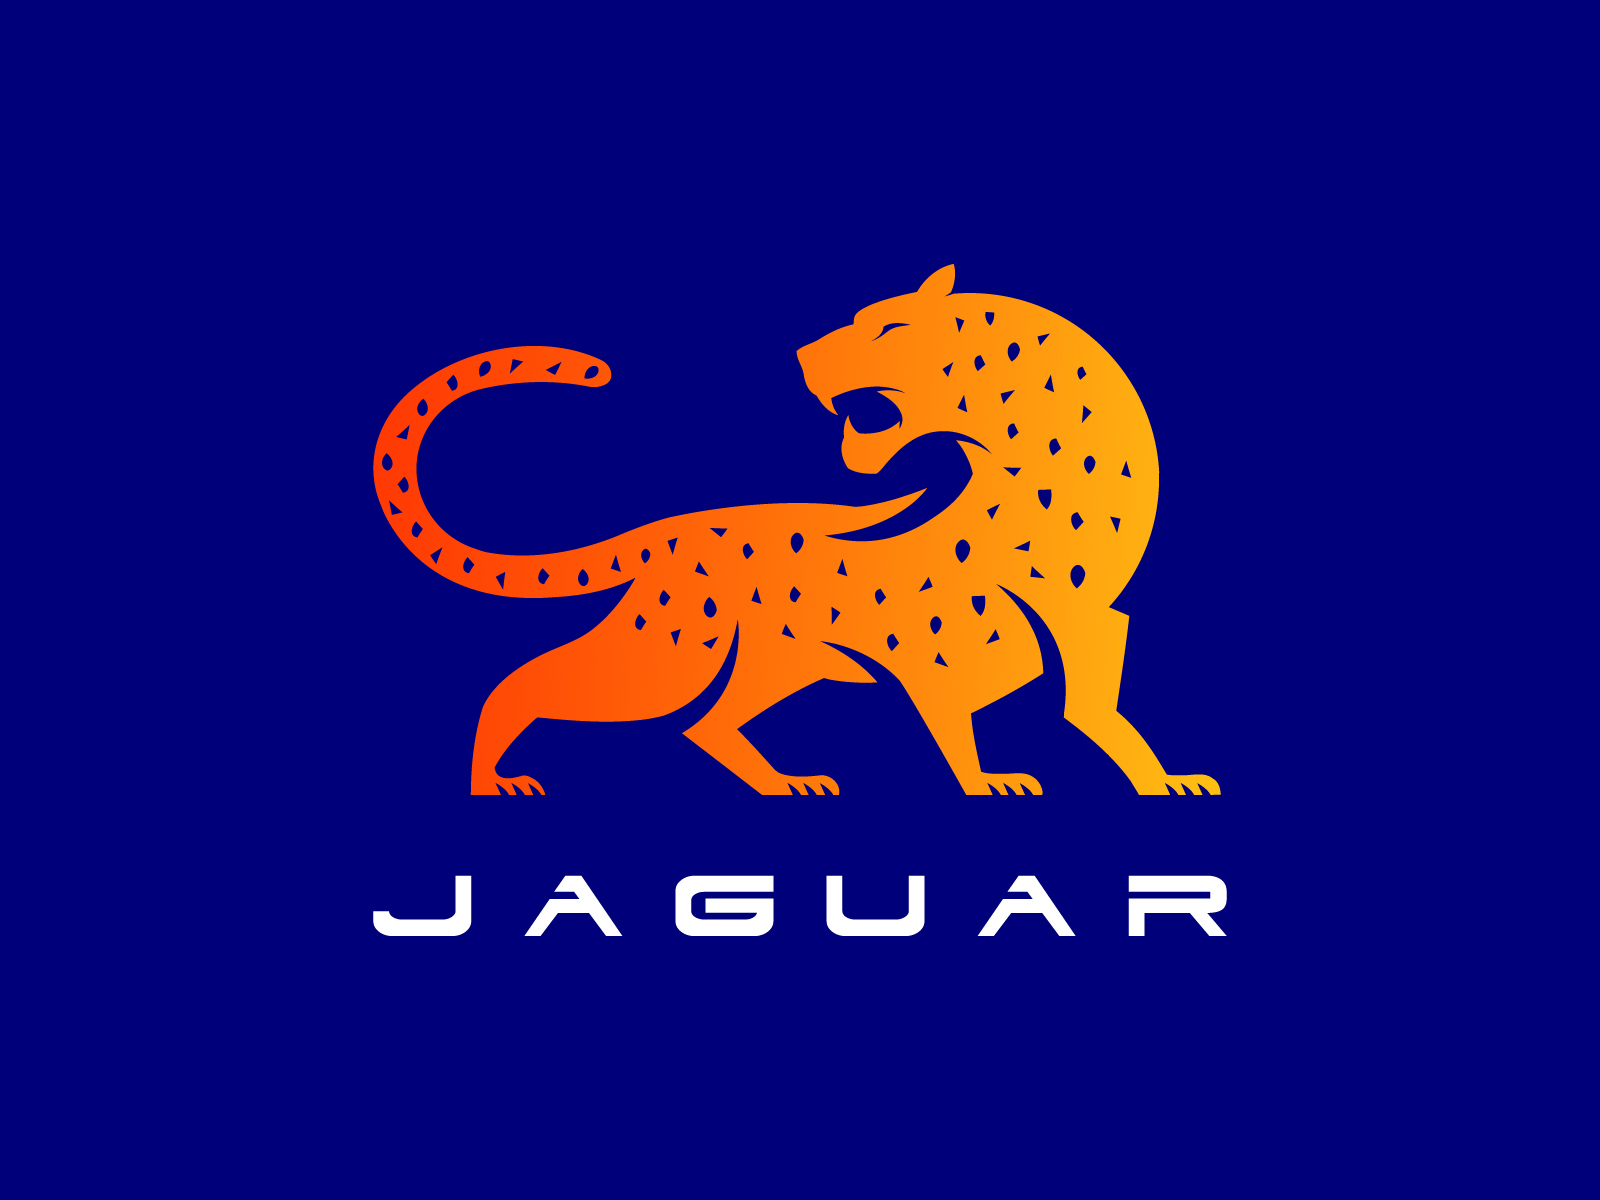 Jaguar Text & Growler Logo Style Window Sticker - 18.5